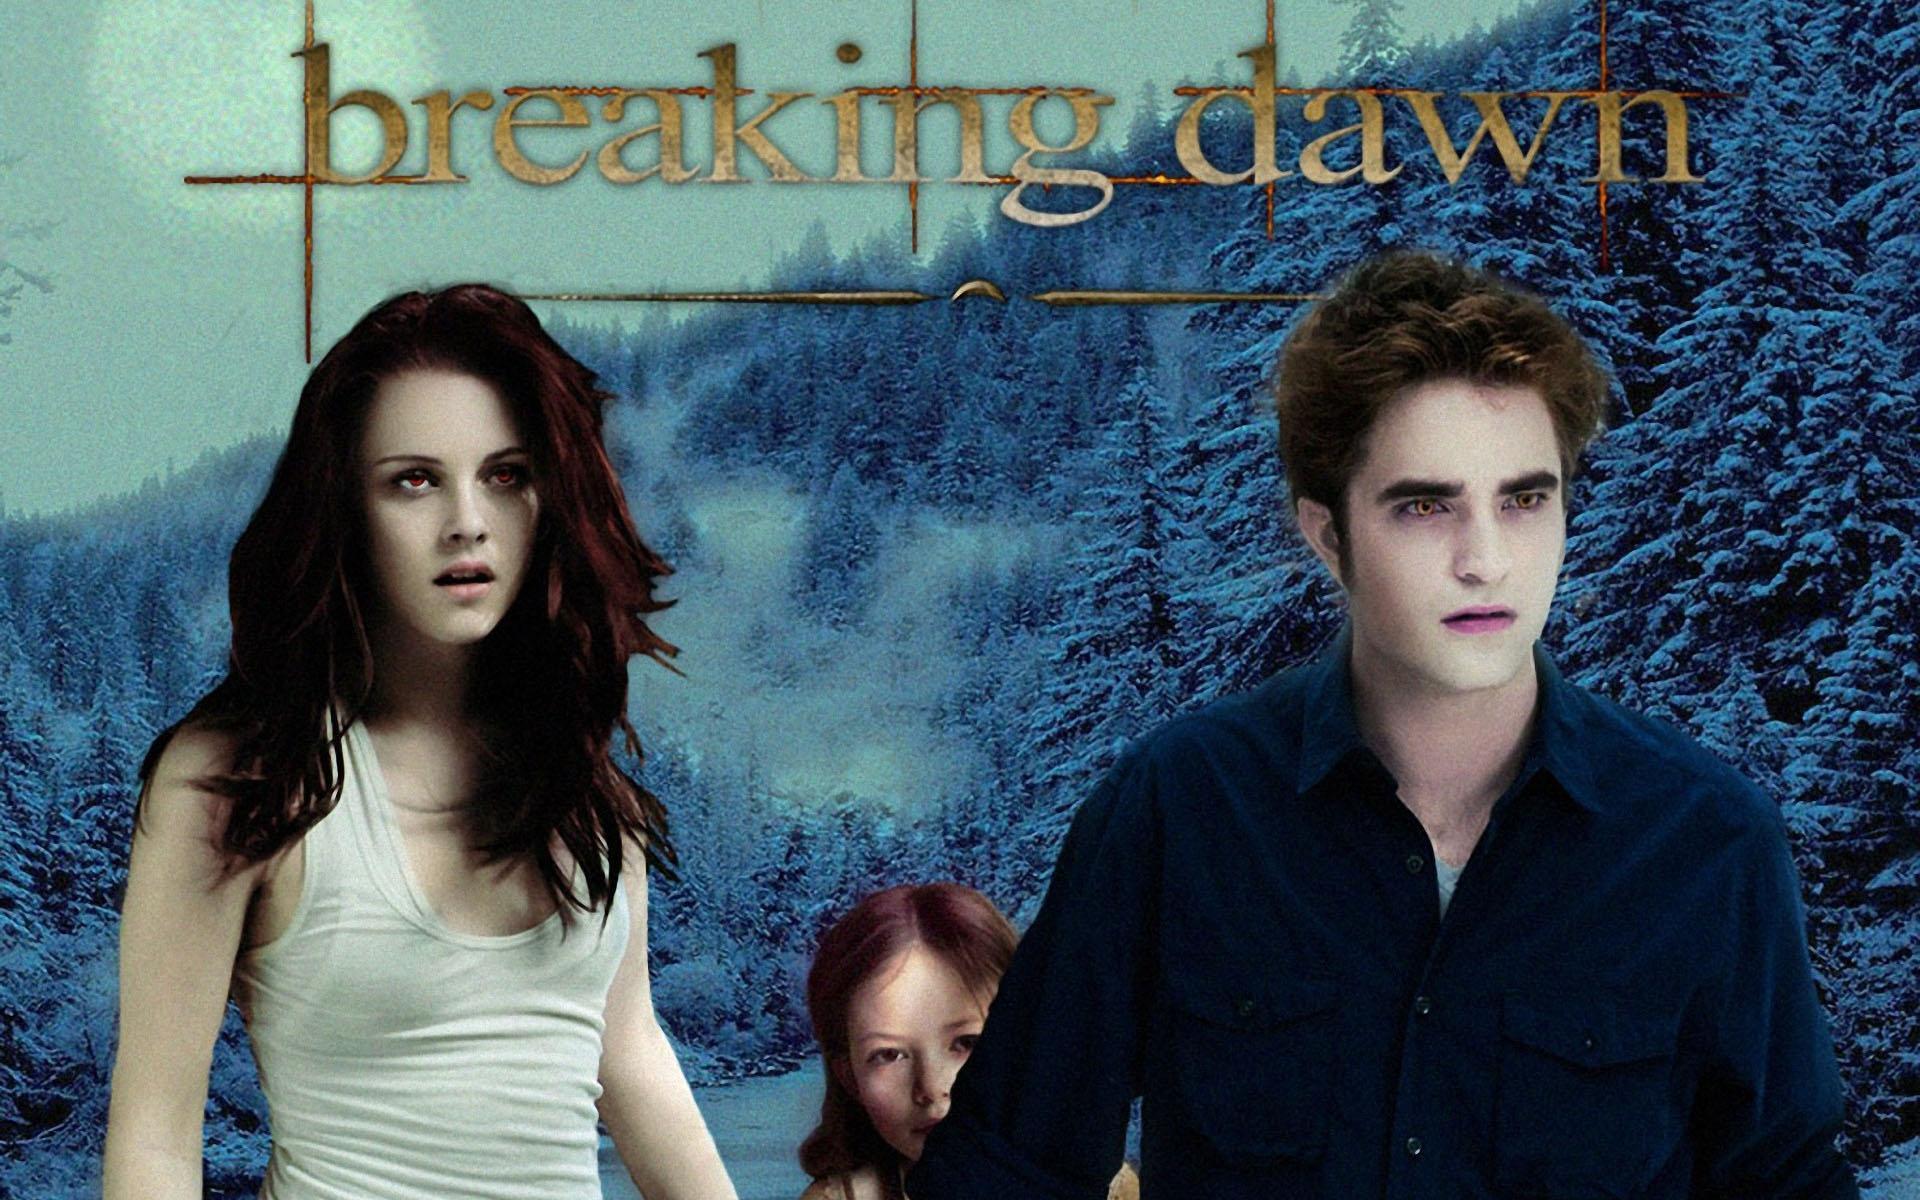 Twilight Movie Breaking Dawn Wallpaper Free HD